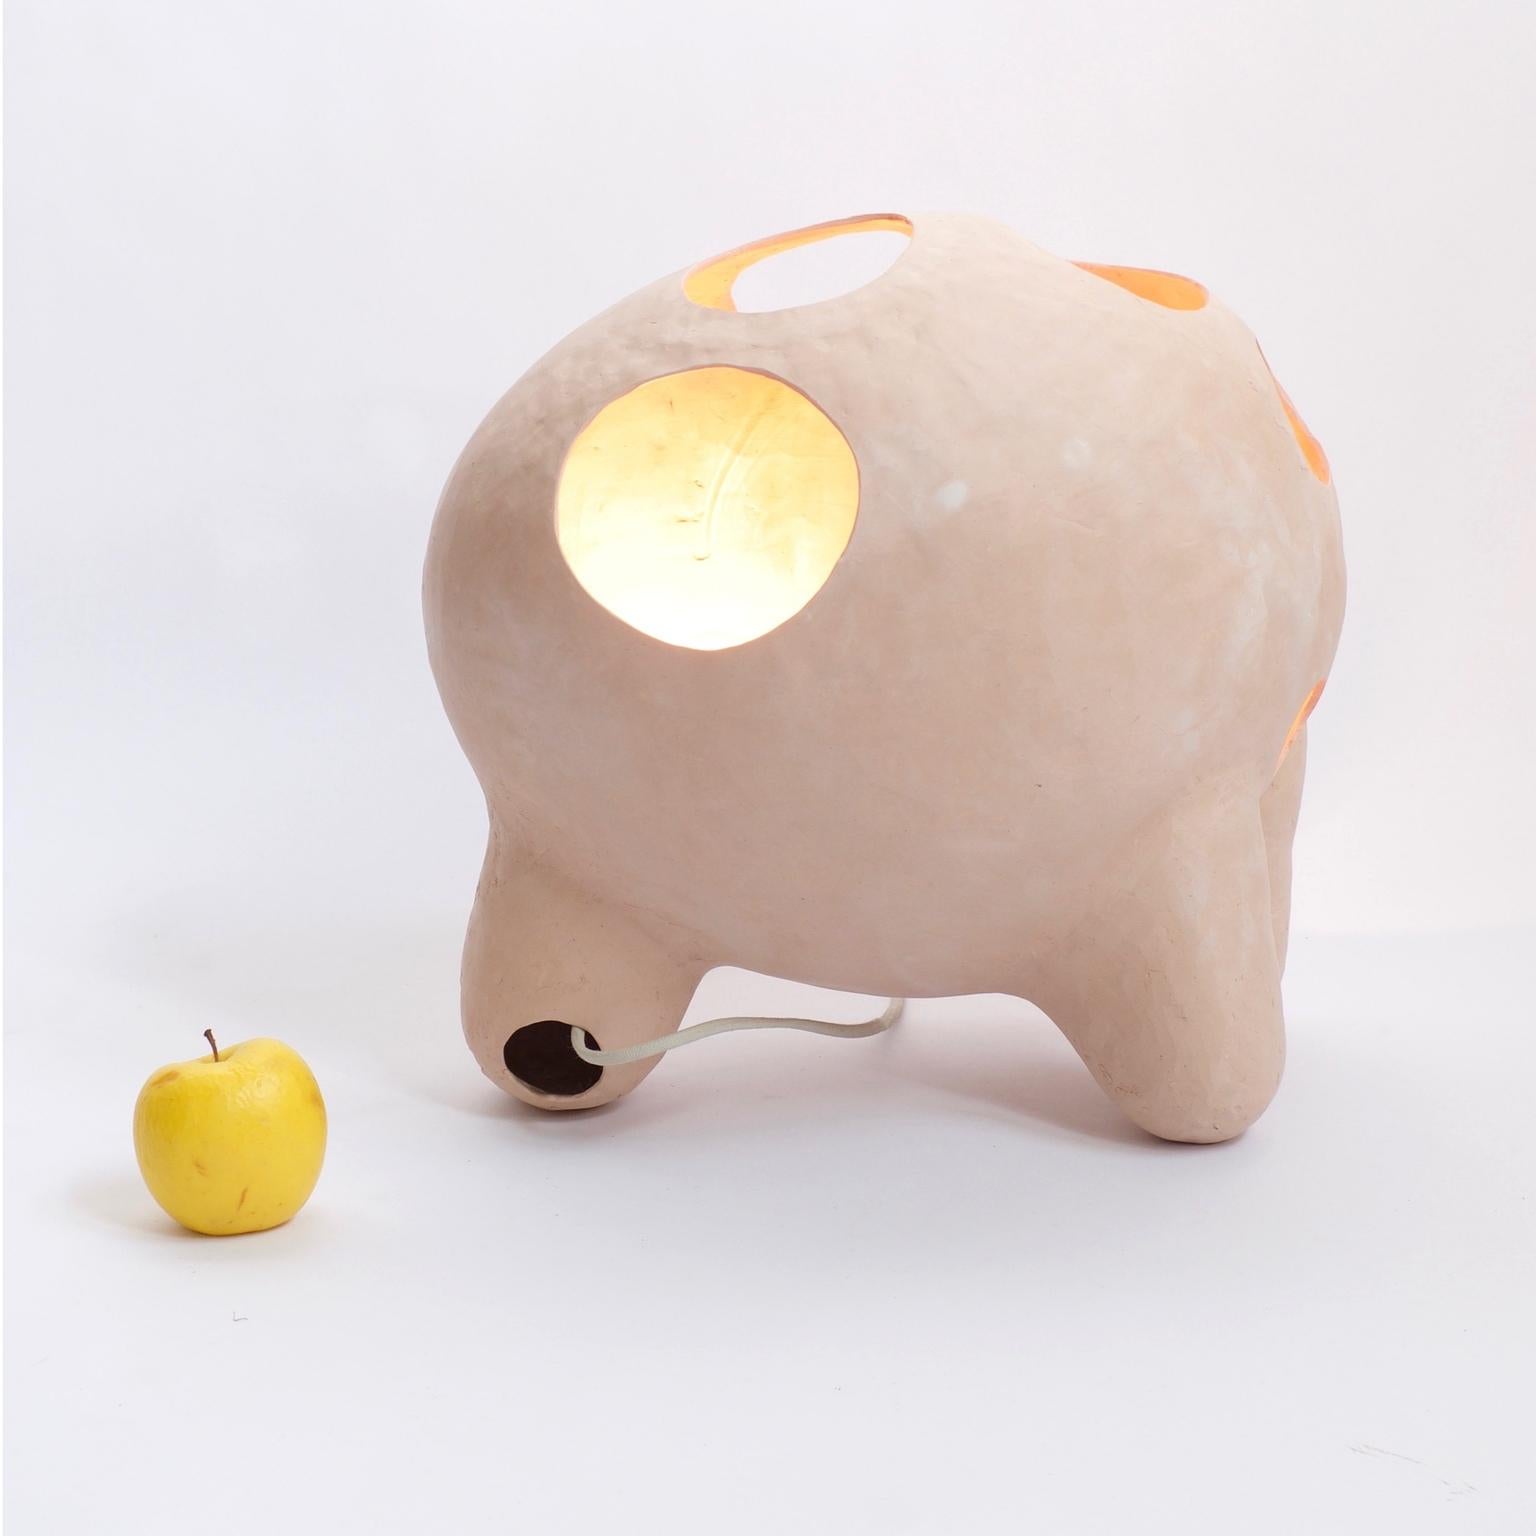 Fired Sculptural Hand-Built Three-Legged Ceramic Table Lamp in Matte Earth Tone